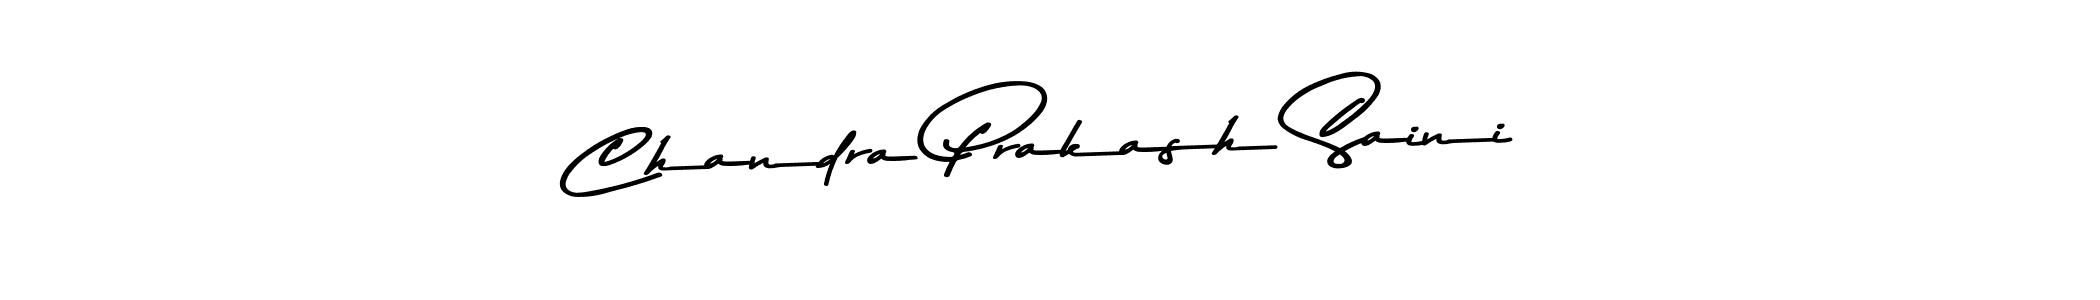 How to Draw Chandra Prakash Saini signature style? Asem Kandis PERSONAL USE is a latest design signature styles for name Chandra Prakash Saini. Chandra Prakash Saini signature style 9 images and pictures png